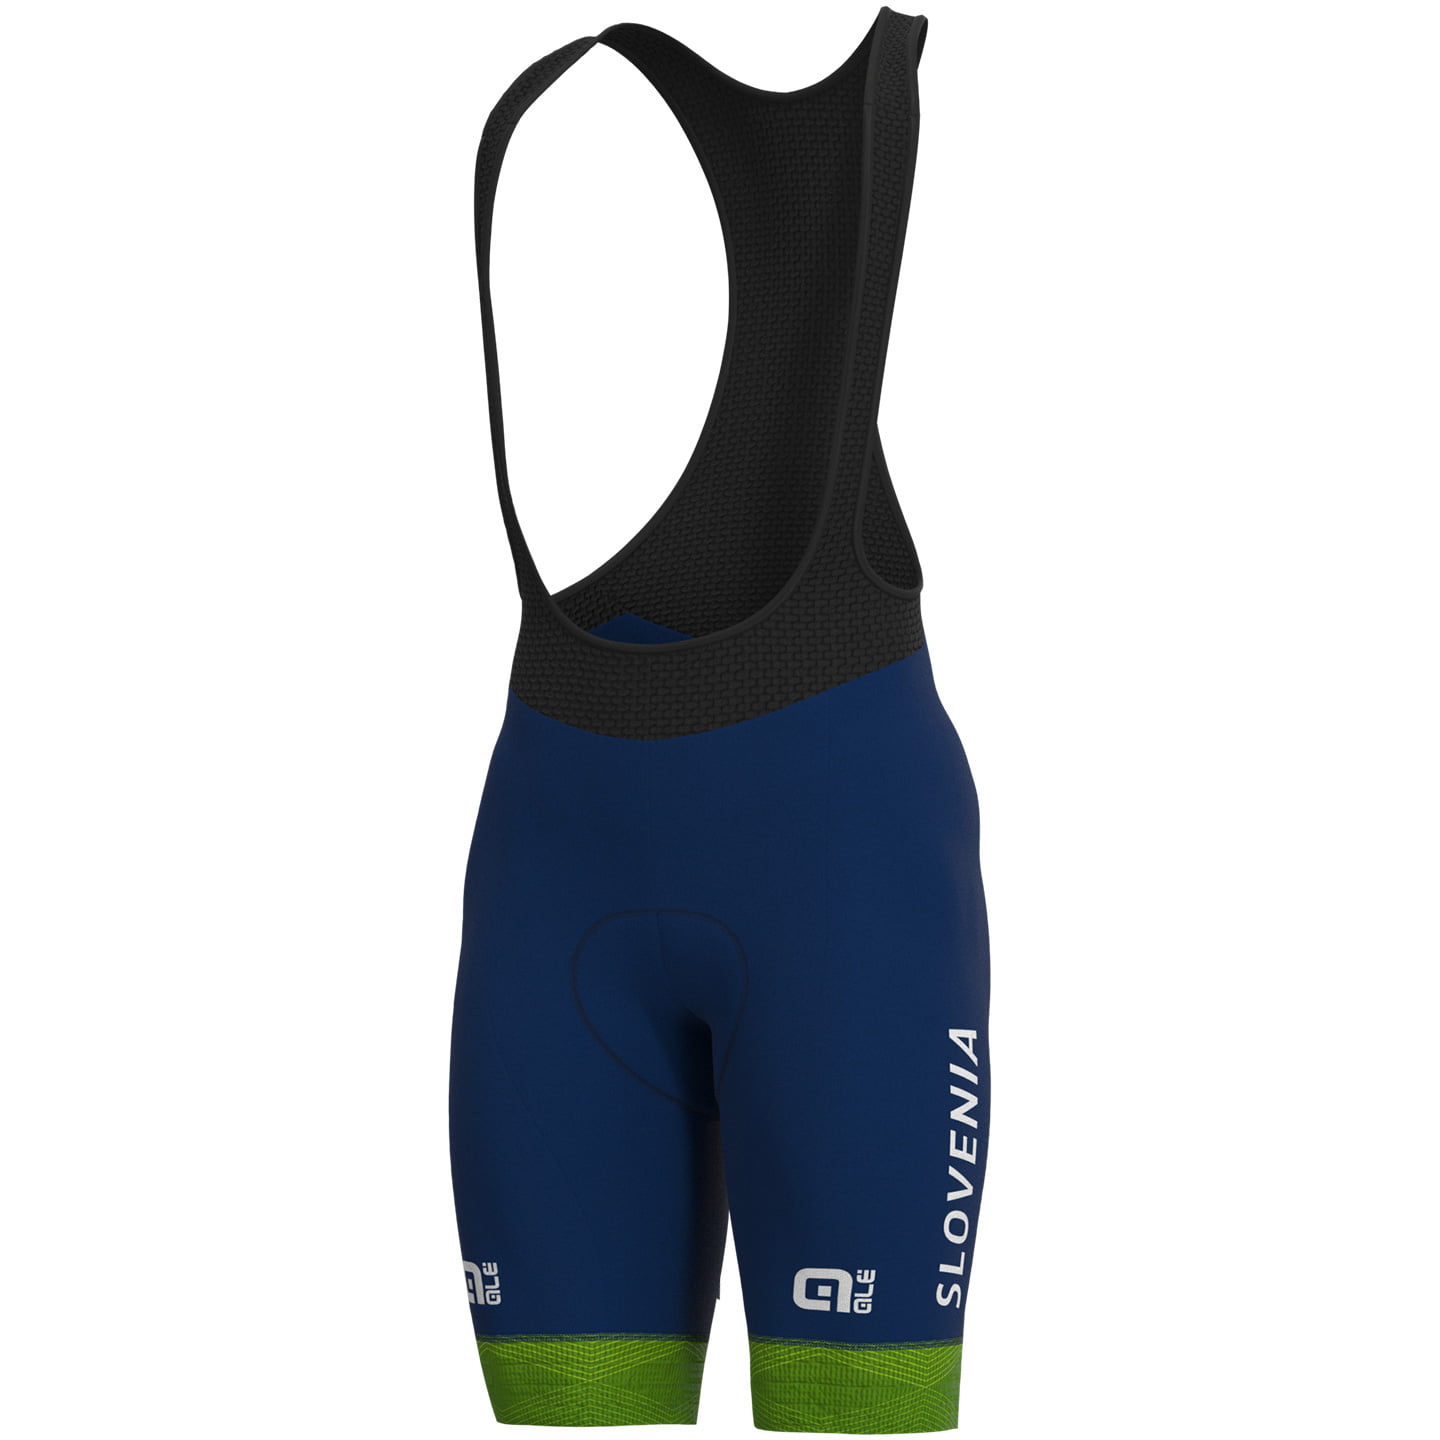 SLOVENIAN NATIONAL TEAM Bib Shorts 2022, for men, size S, Cycle shorts, Cycling clothing